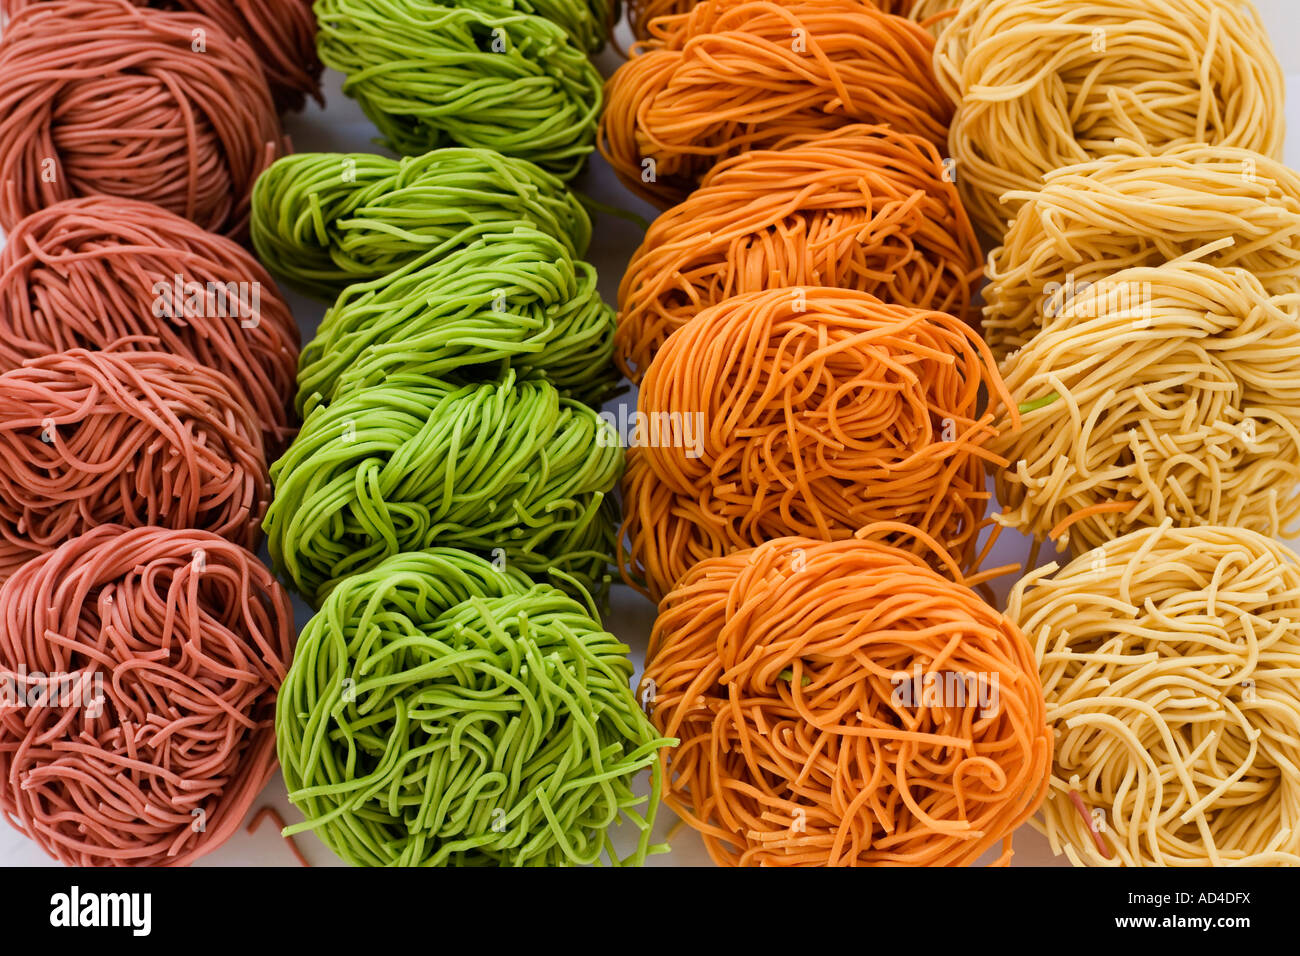 Multicolored noodles Stock Photo